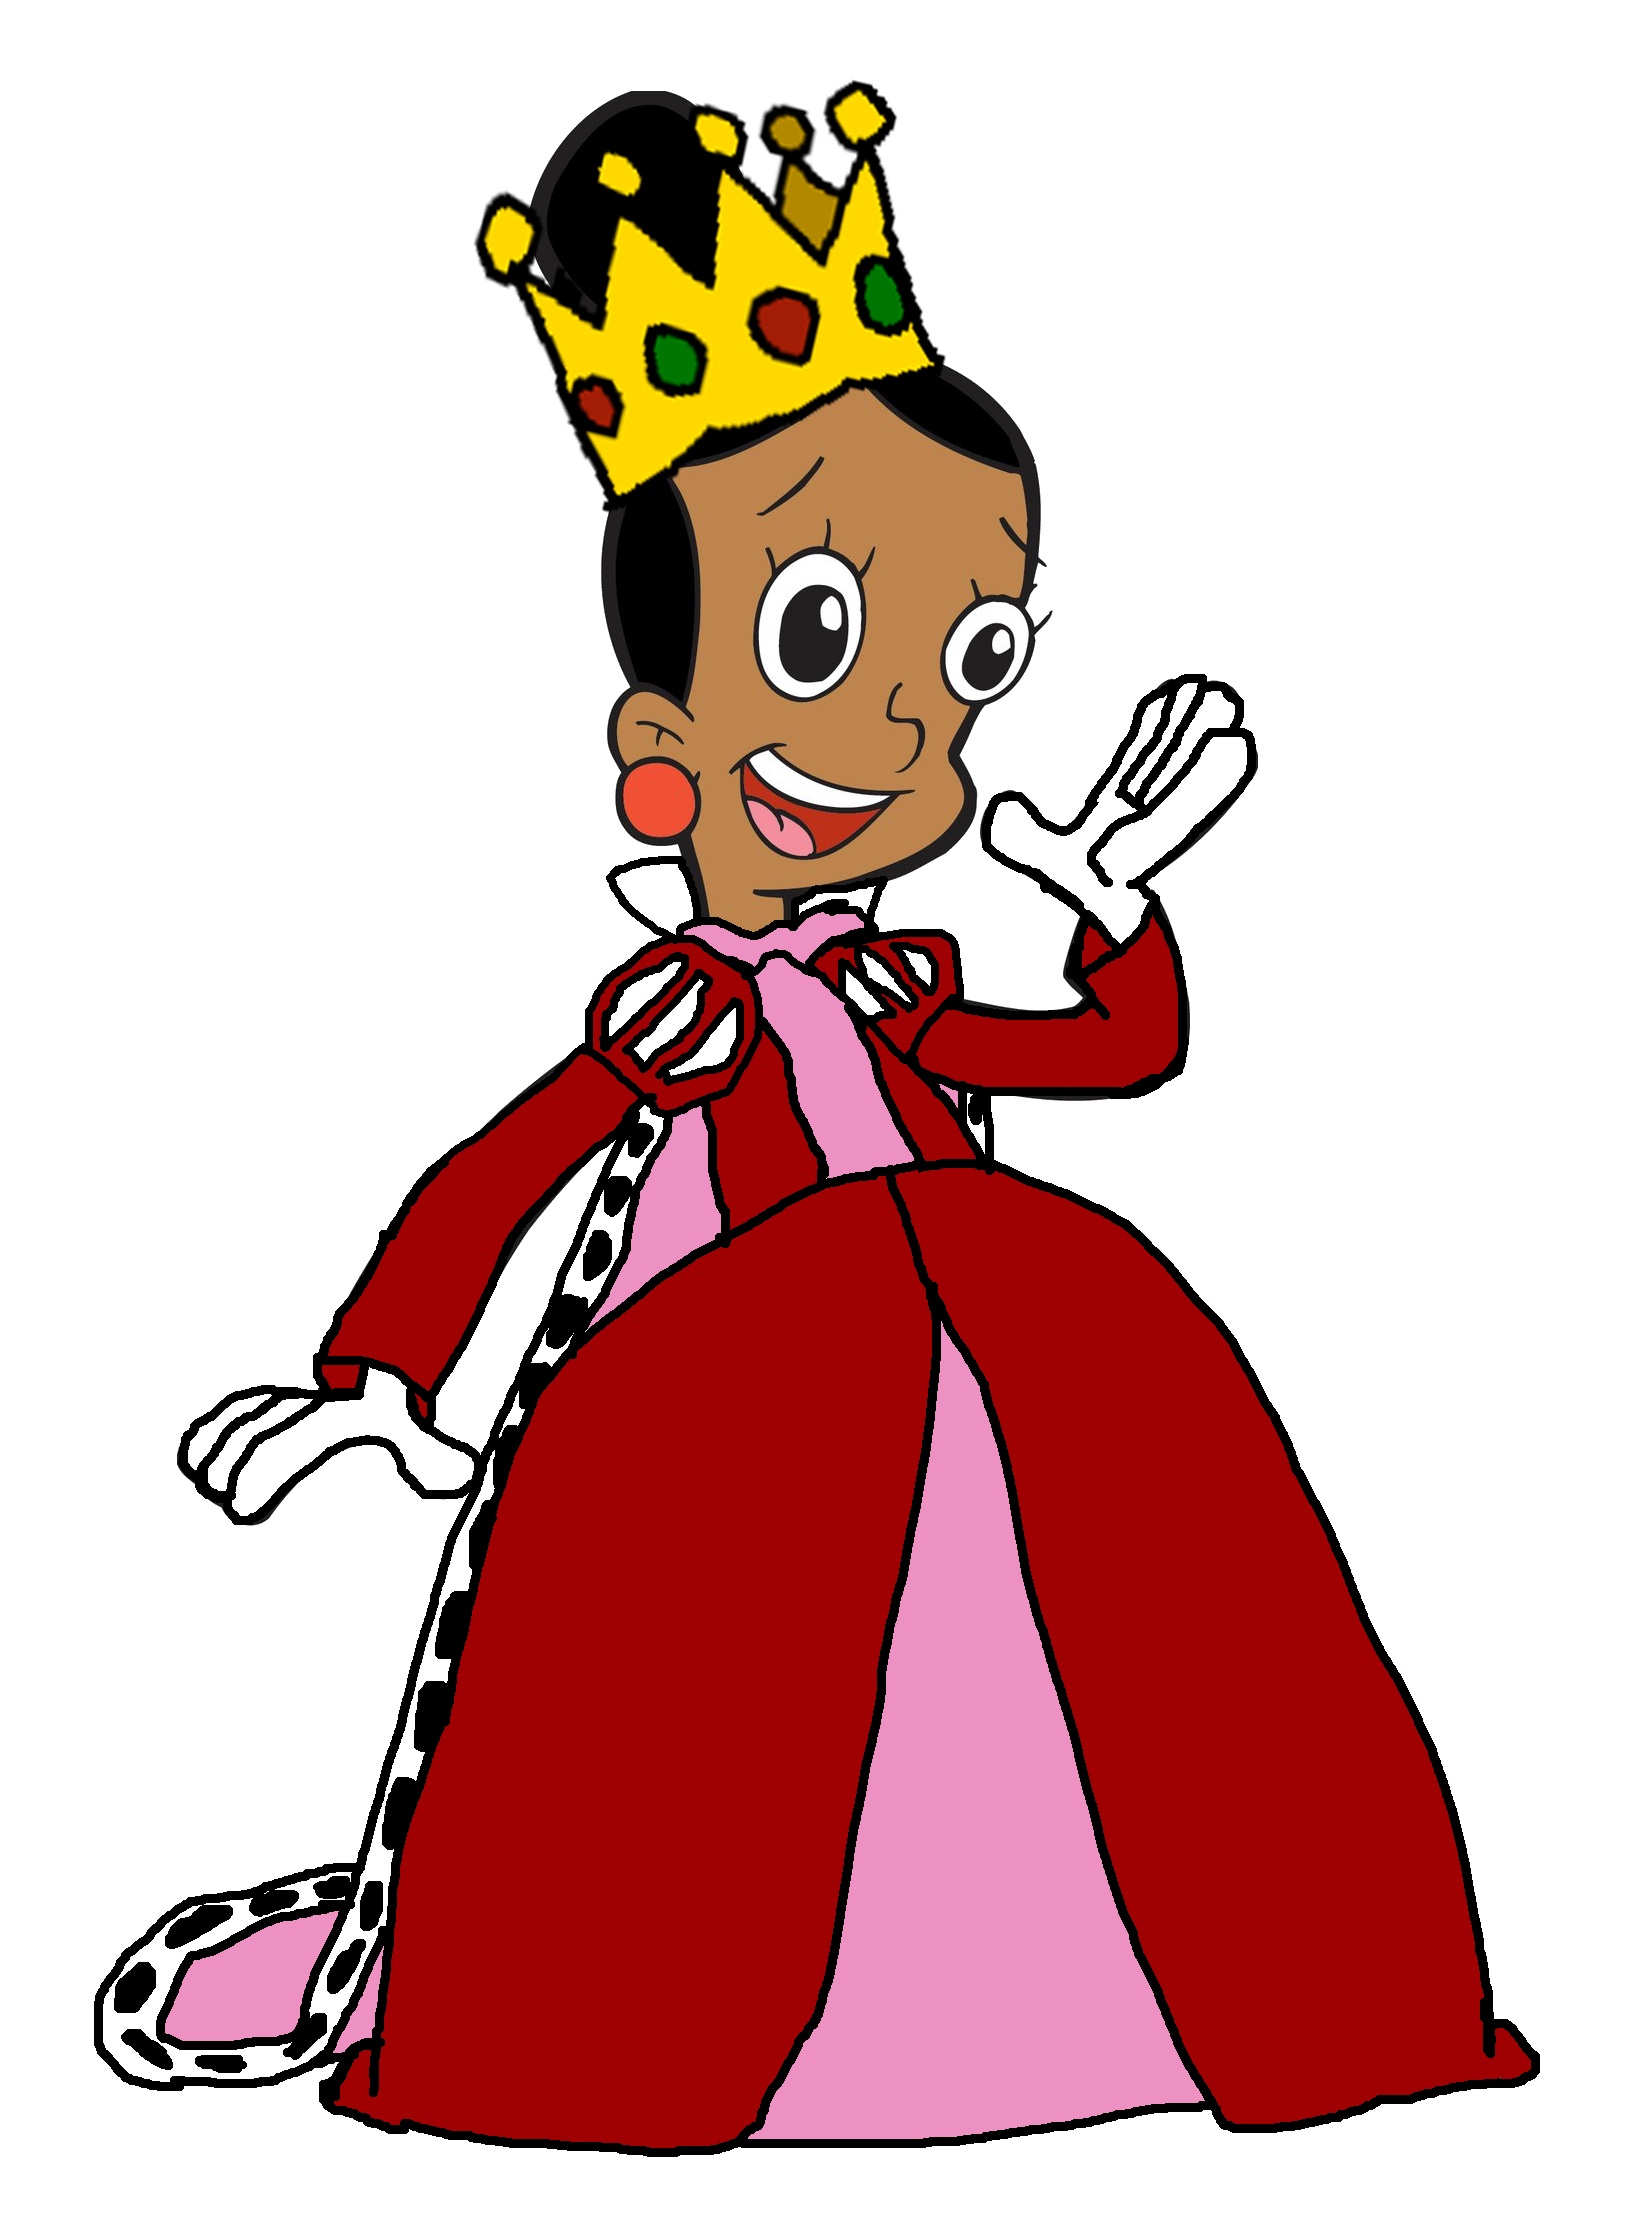 Queen Images Cartoon Cliparts.co